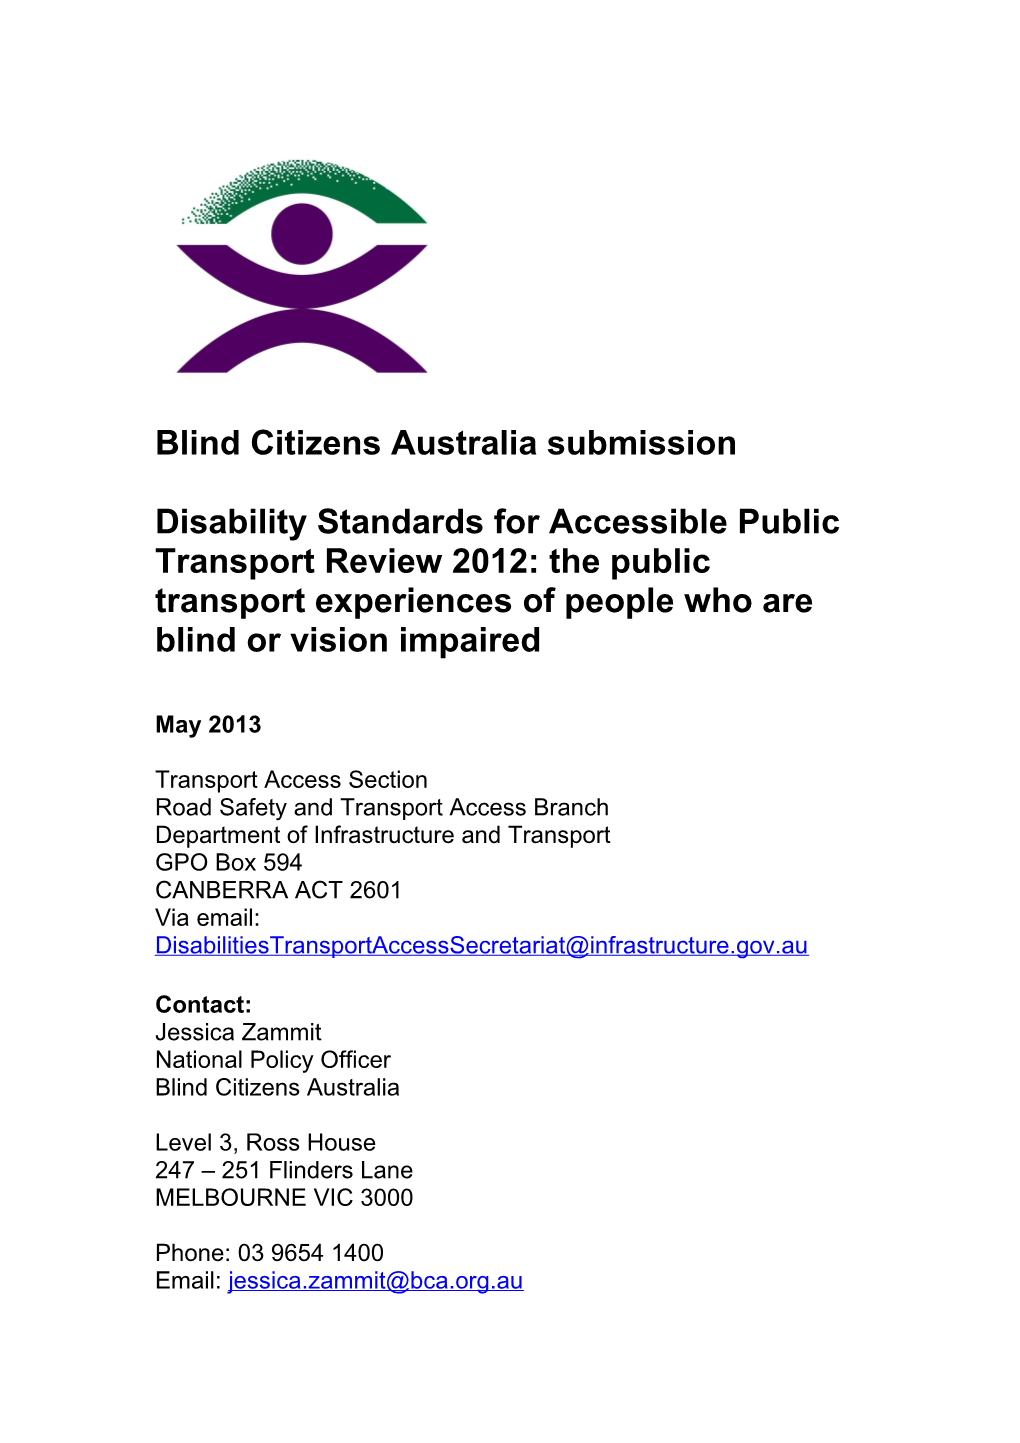 Blind Citizens Australia Submission